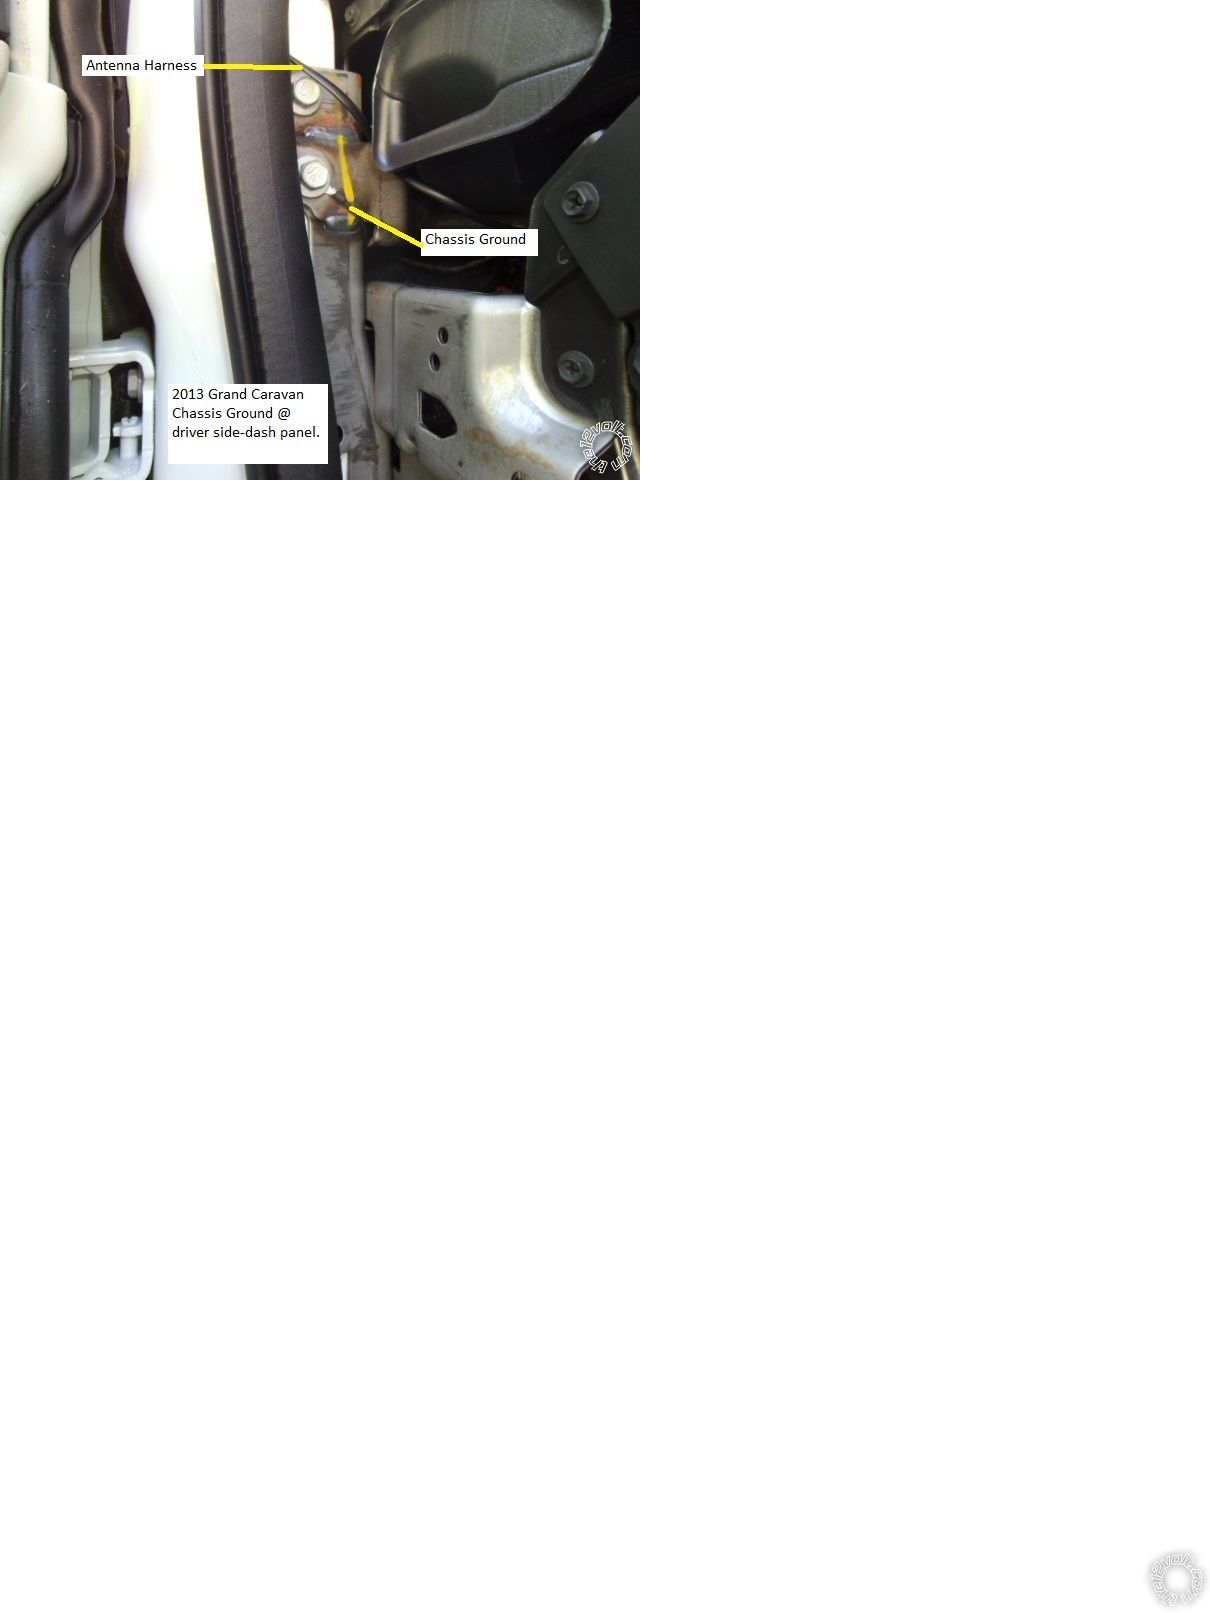 2015 Chevrolet Spark LS, Remote Start -- posted image.